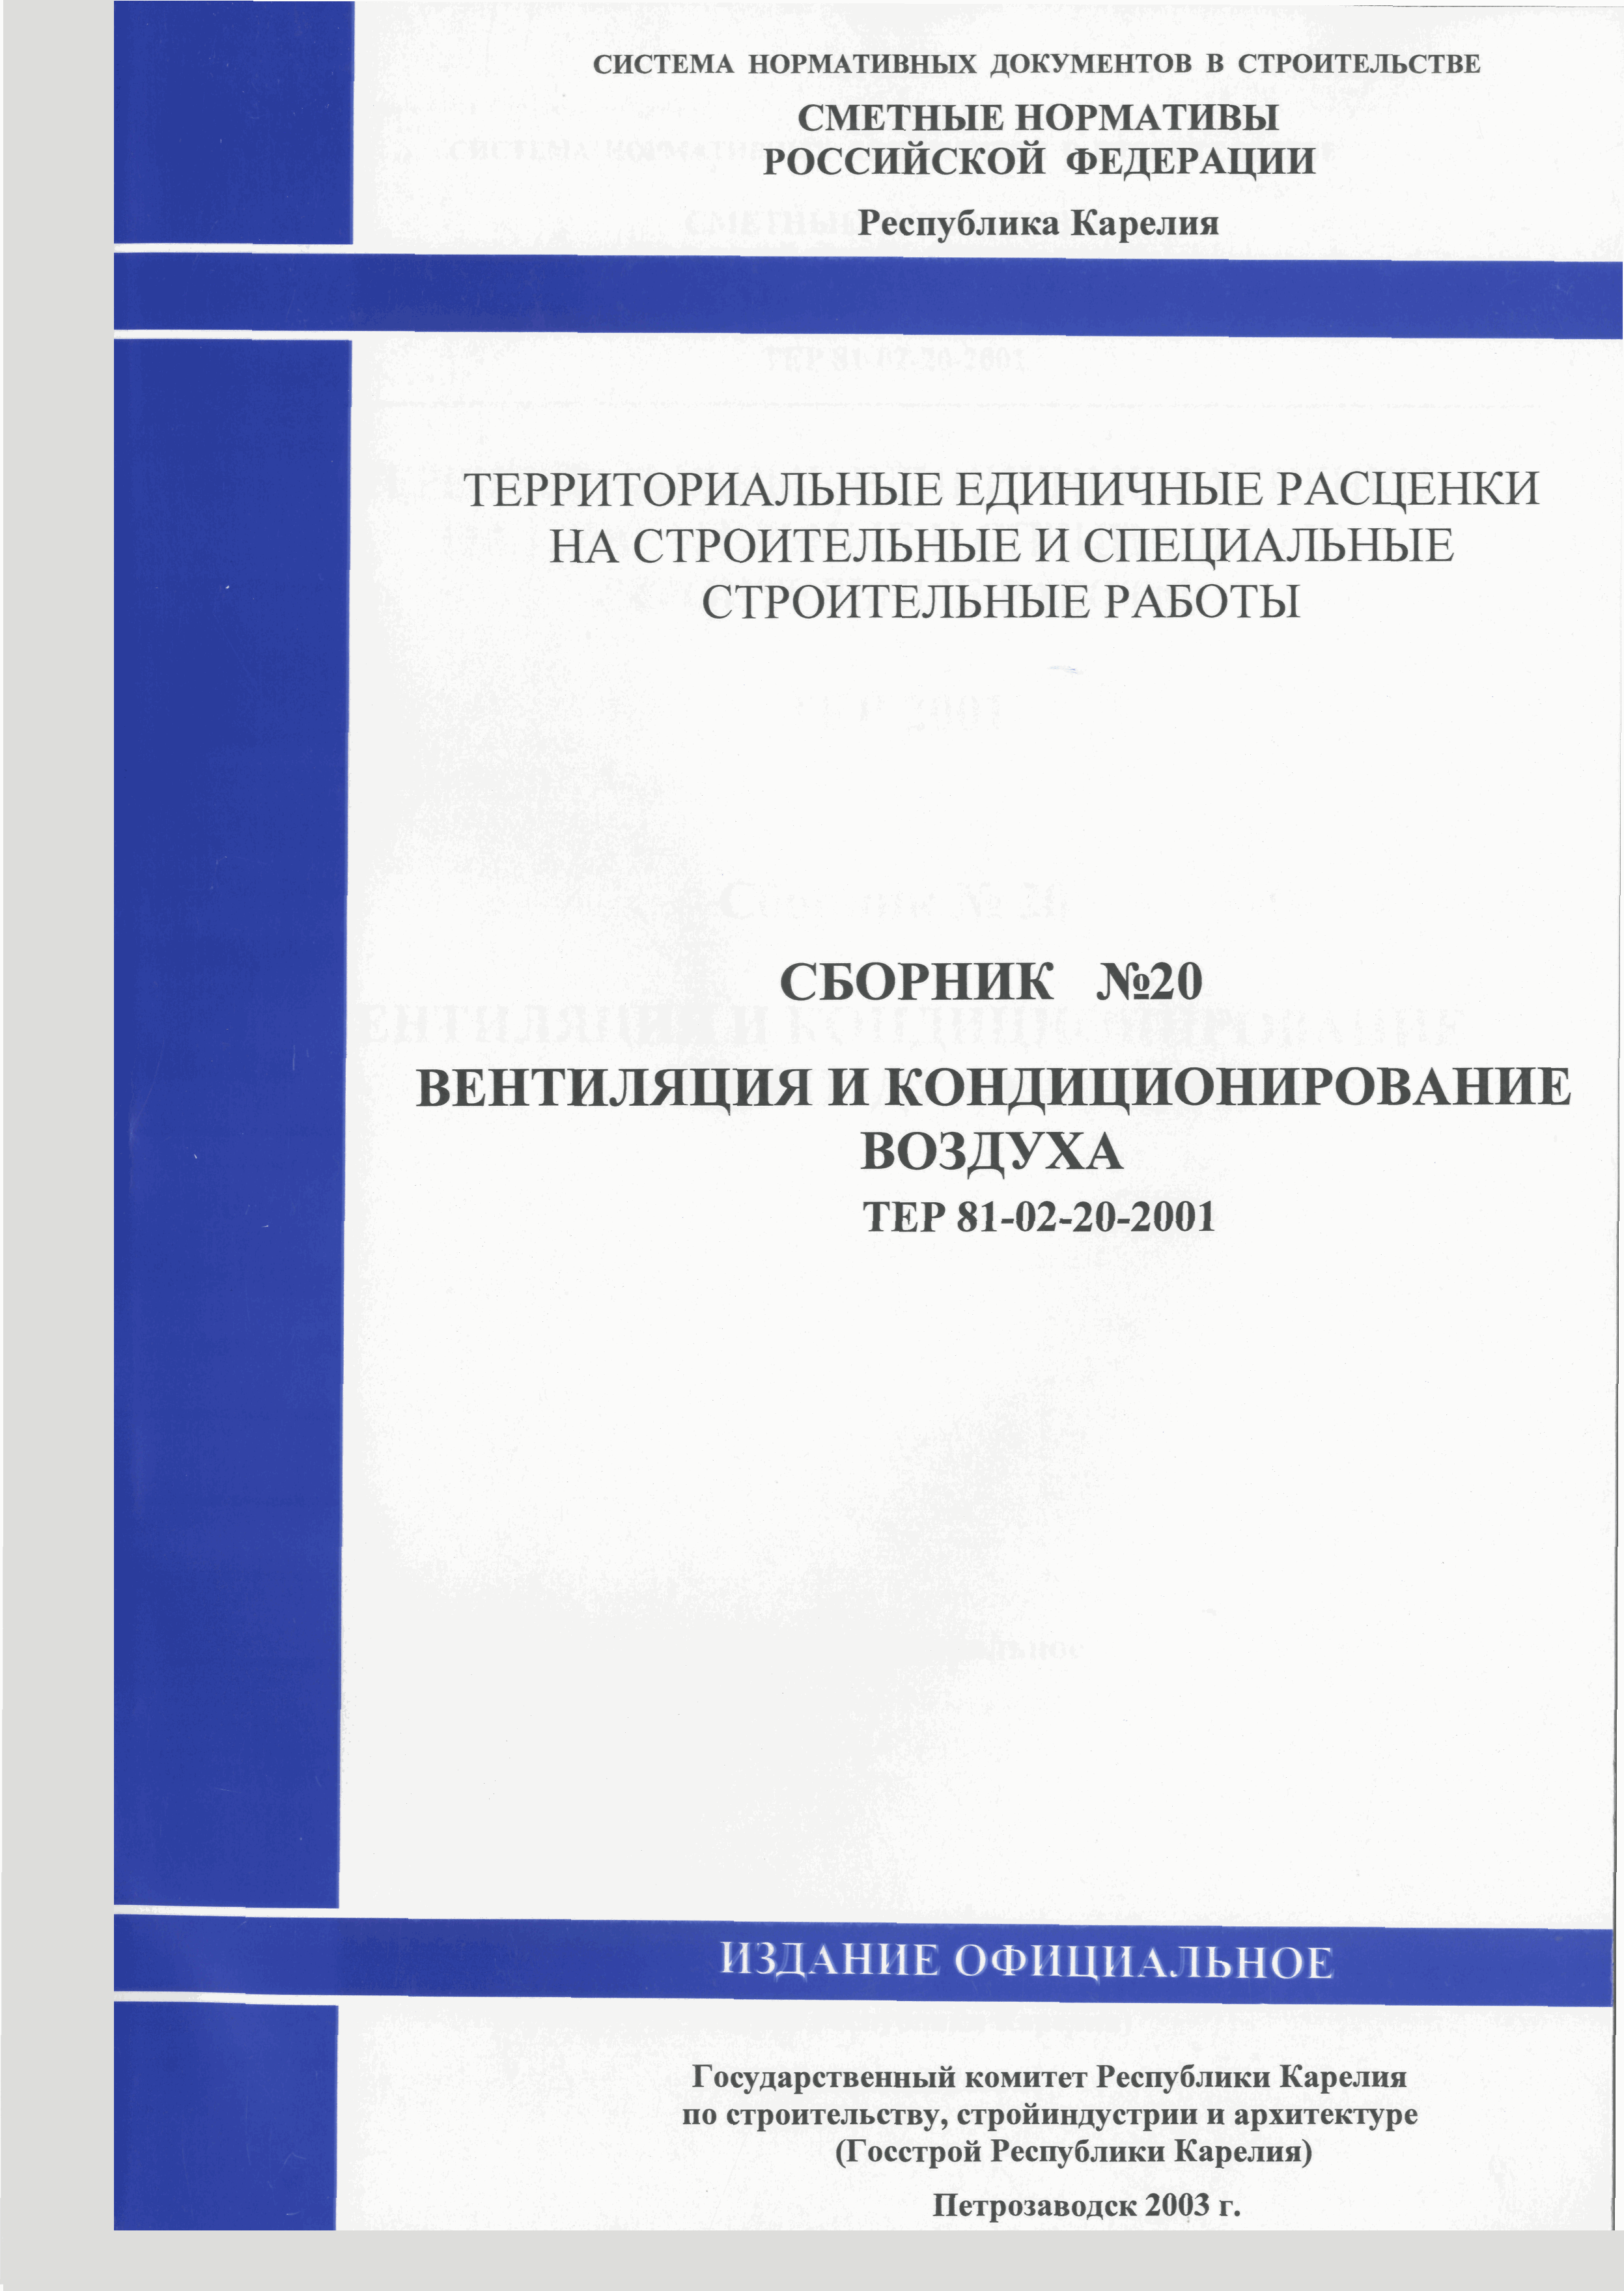 ТЕР Республика Карелия 2001-20